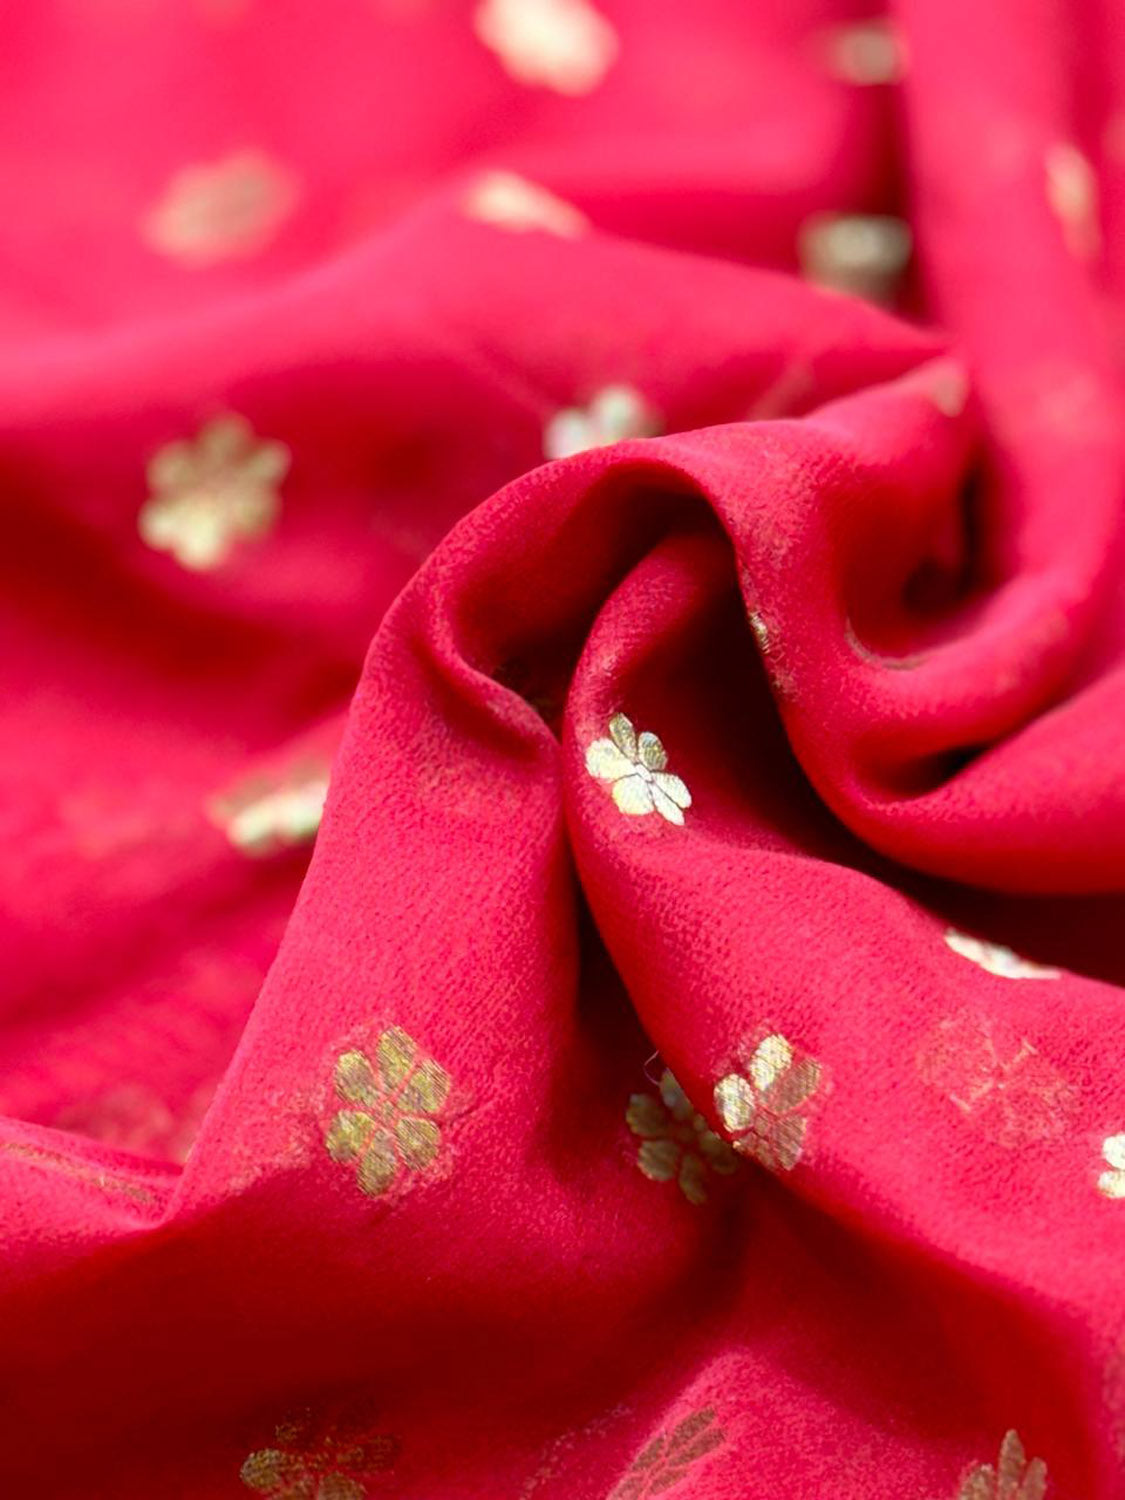 Stunning Red Banarasi Georgette Saree - Handloom Beauty - Luxurion World